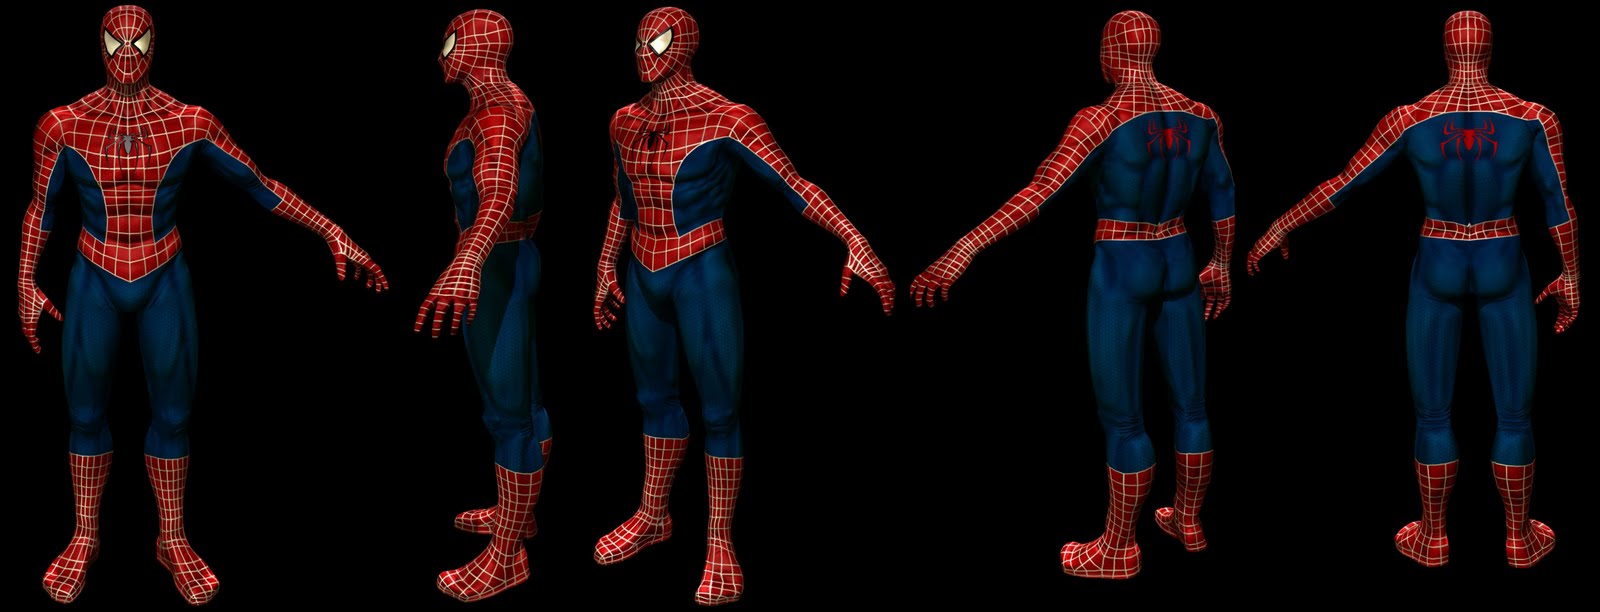 Spiderman Model